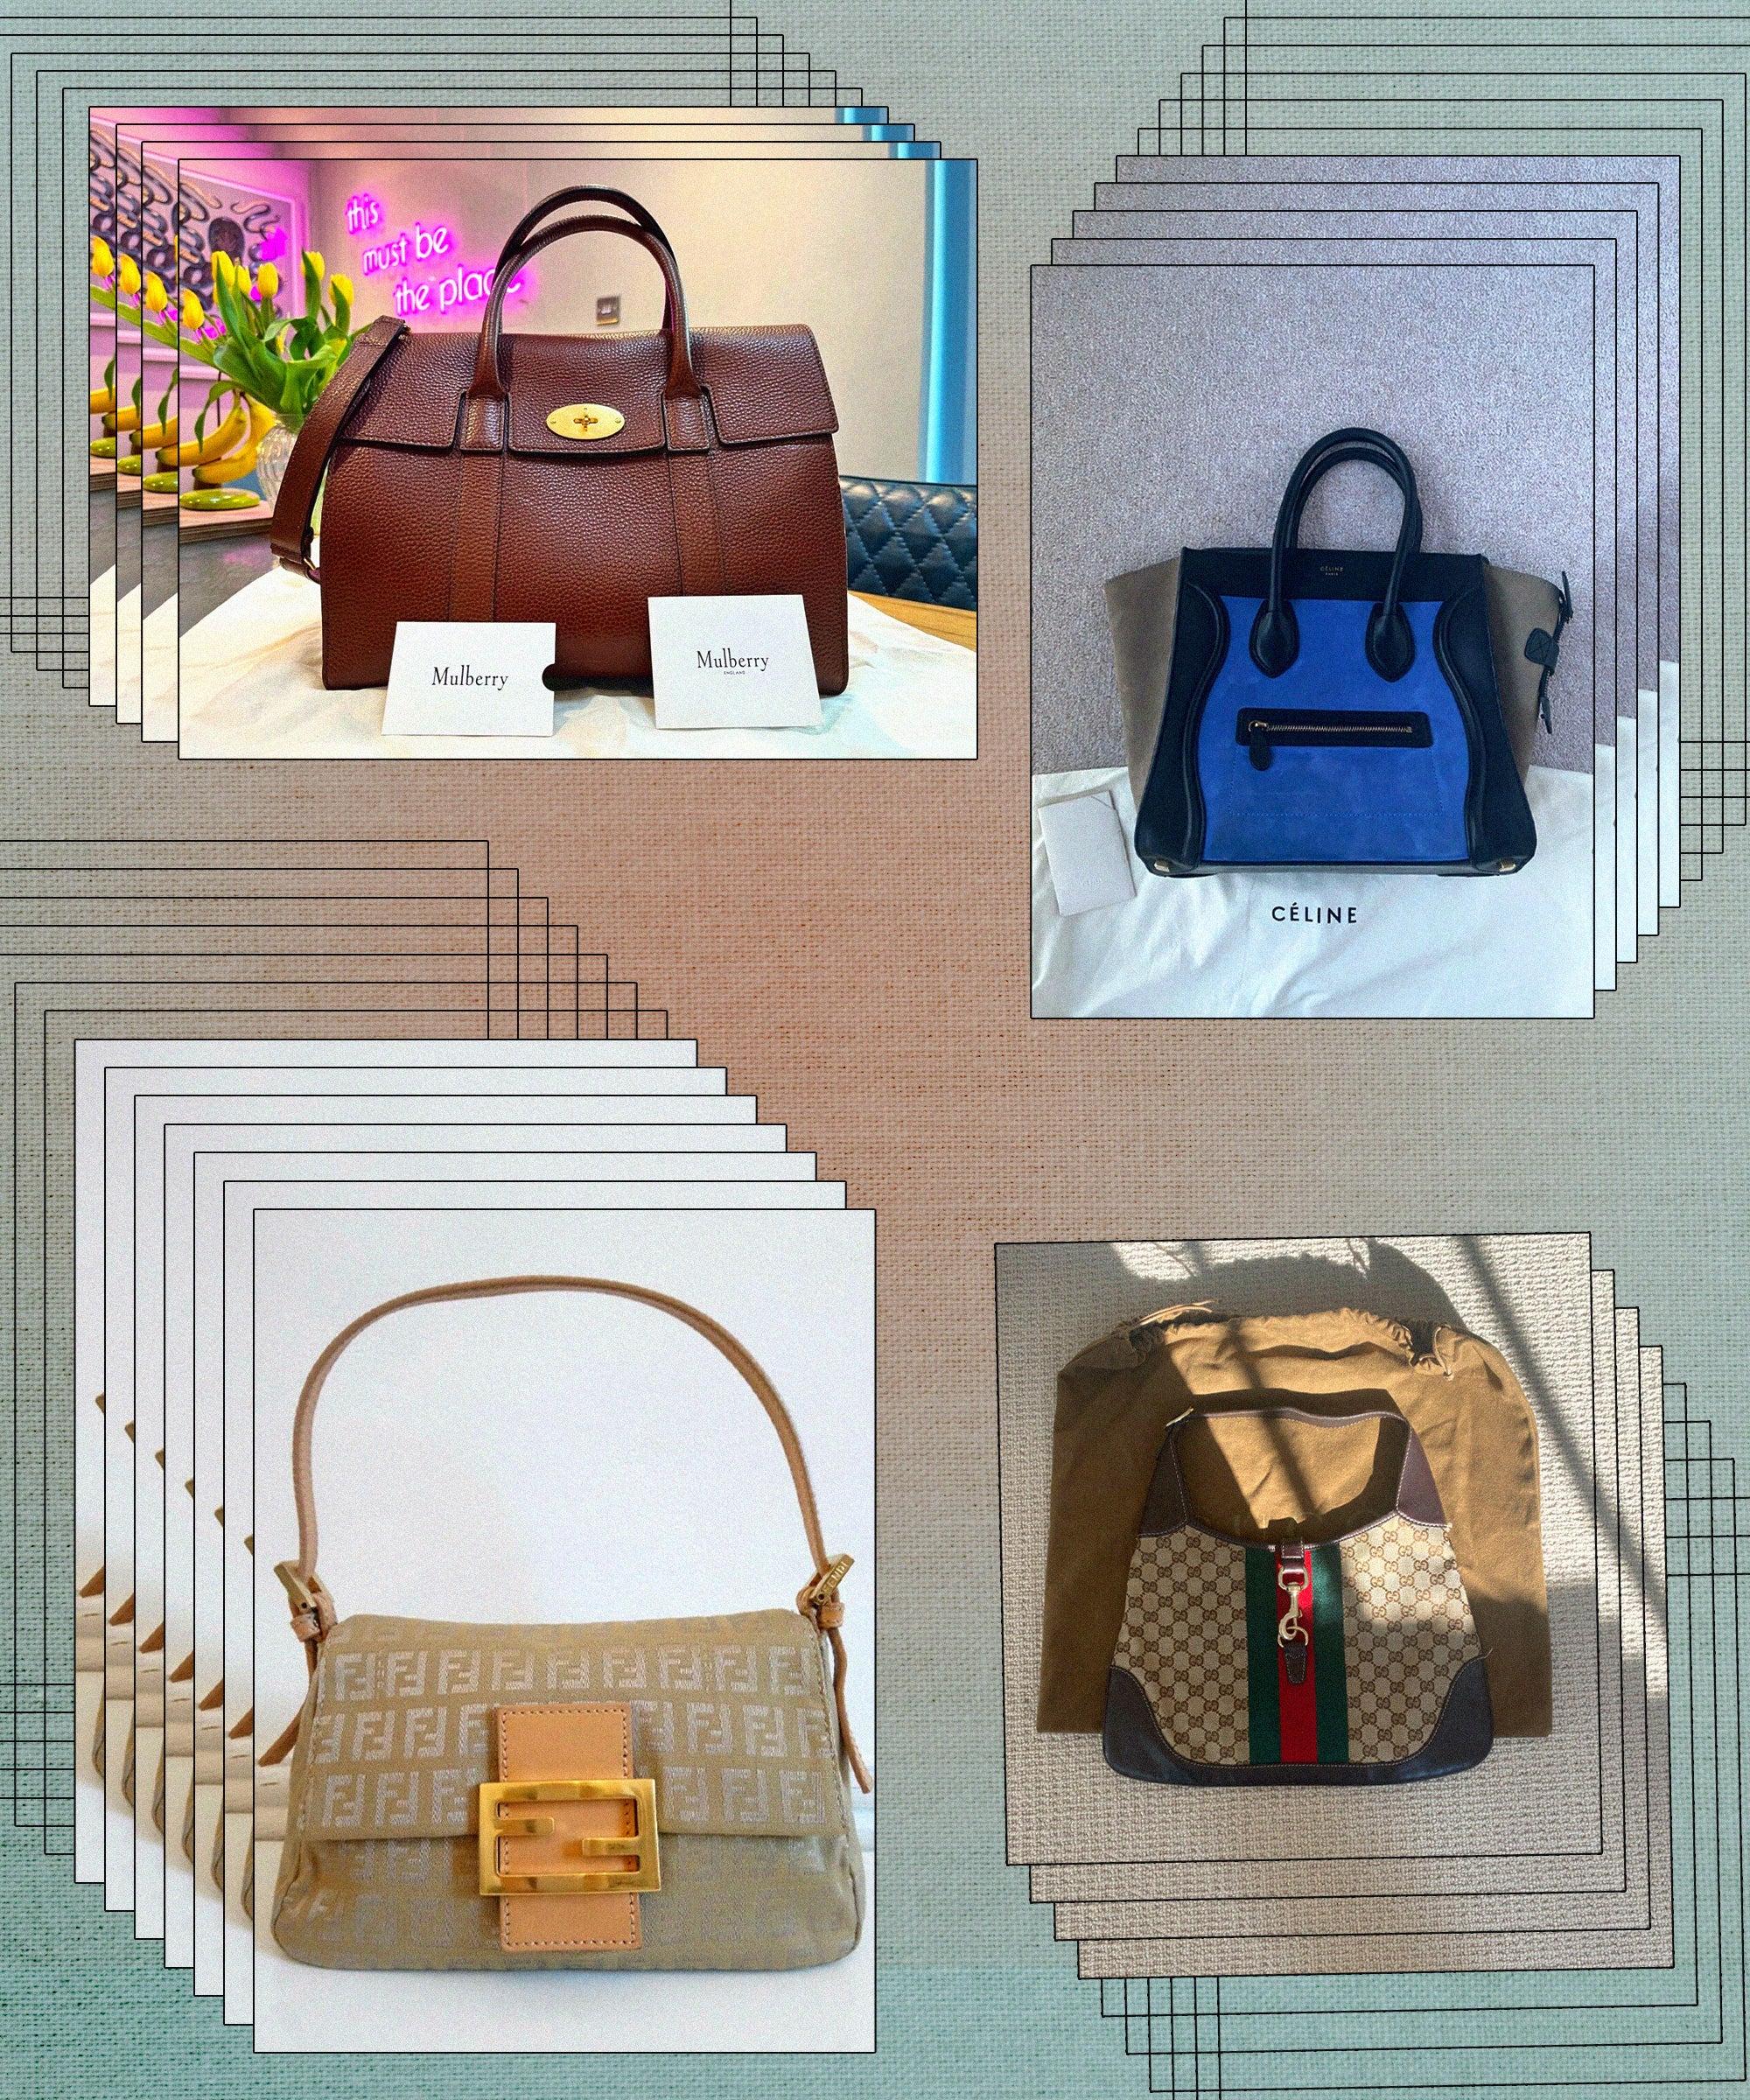 Chikencall 3 ways Women Canvas Purses Handbags Totes Shoulder Bag Backpack  Hobo | eBay